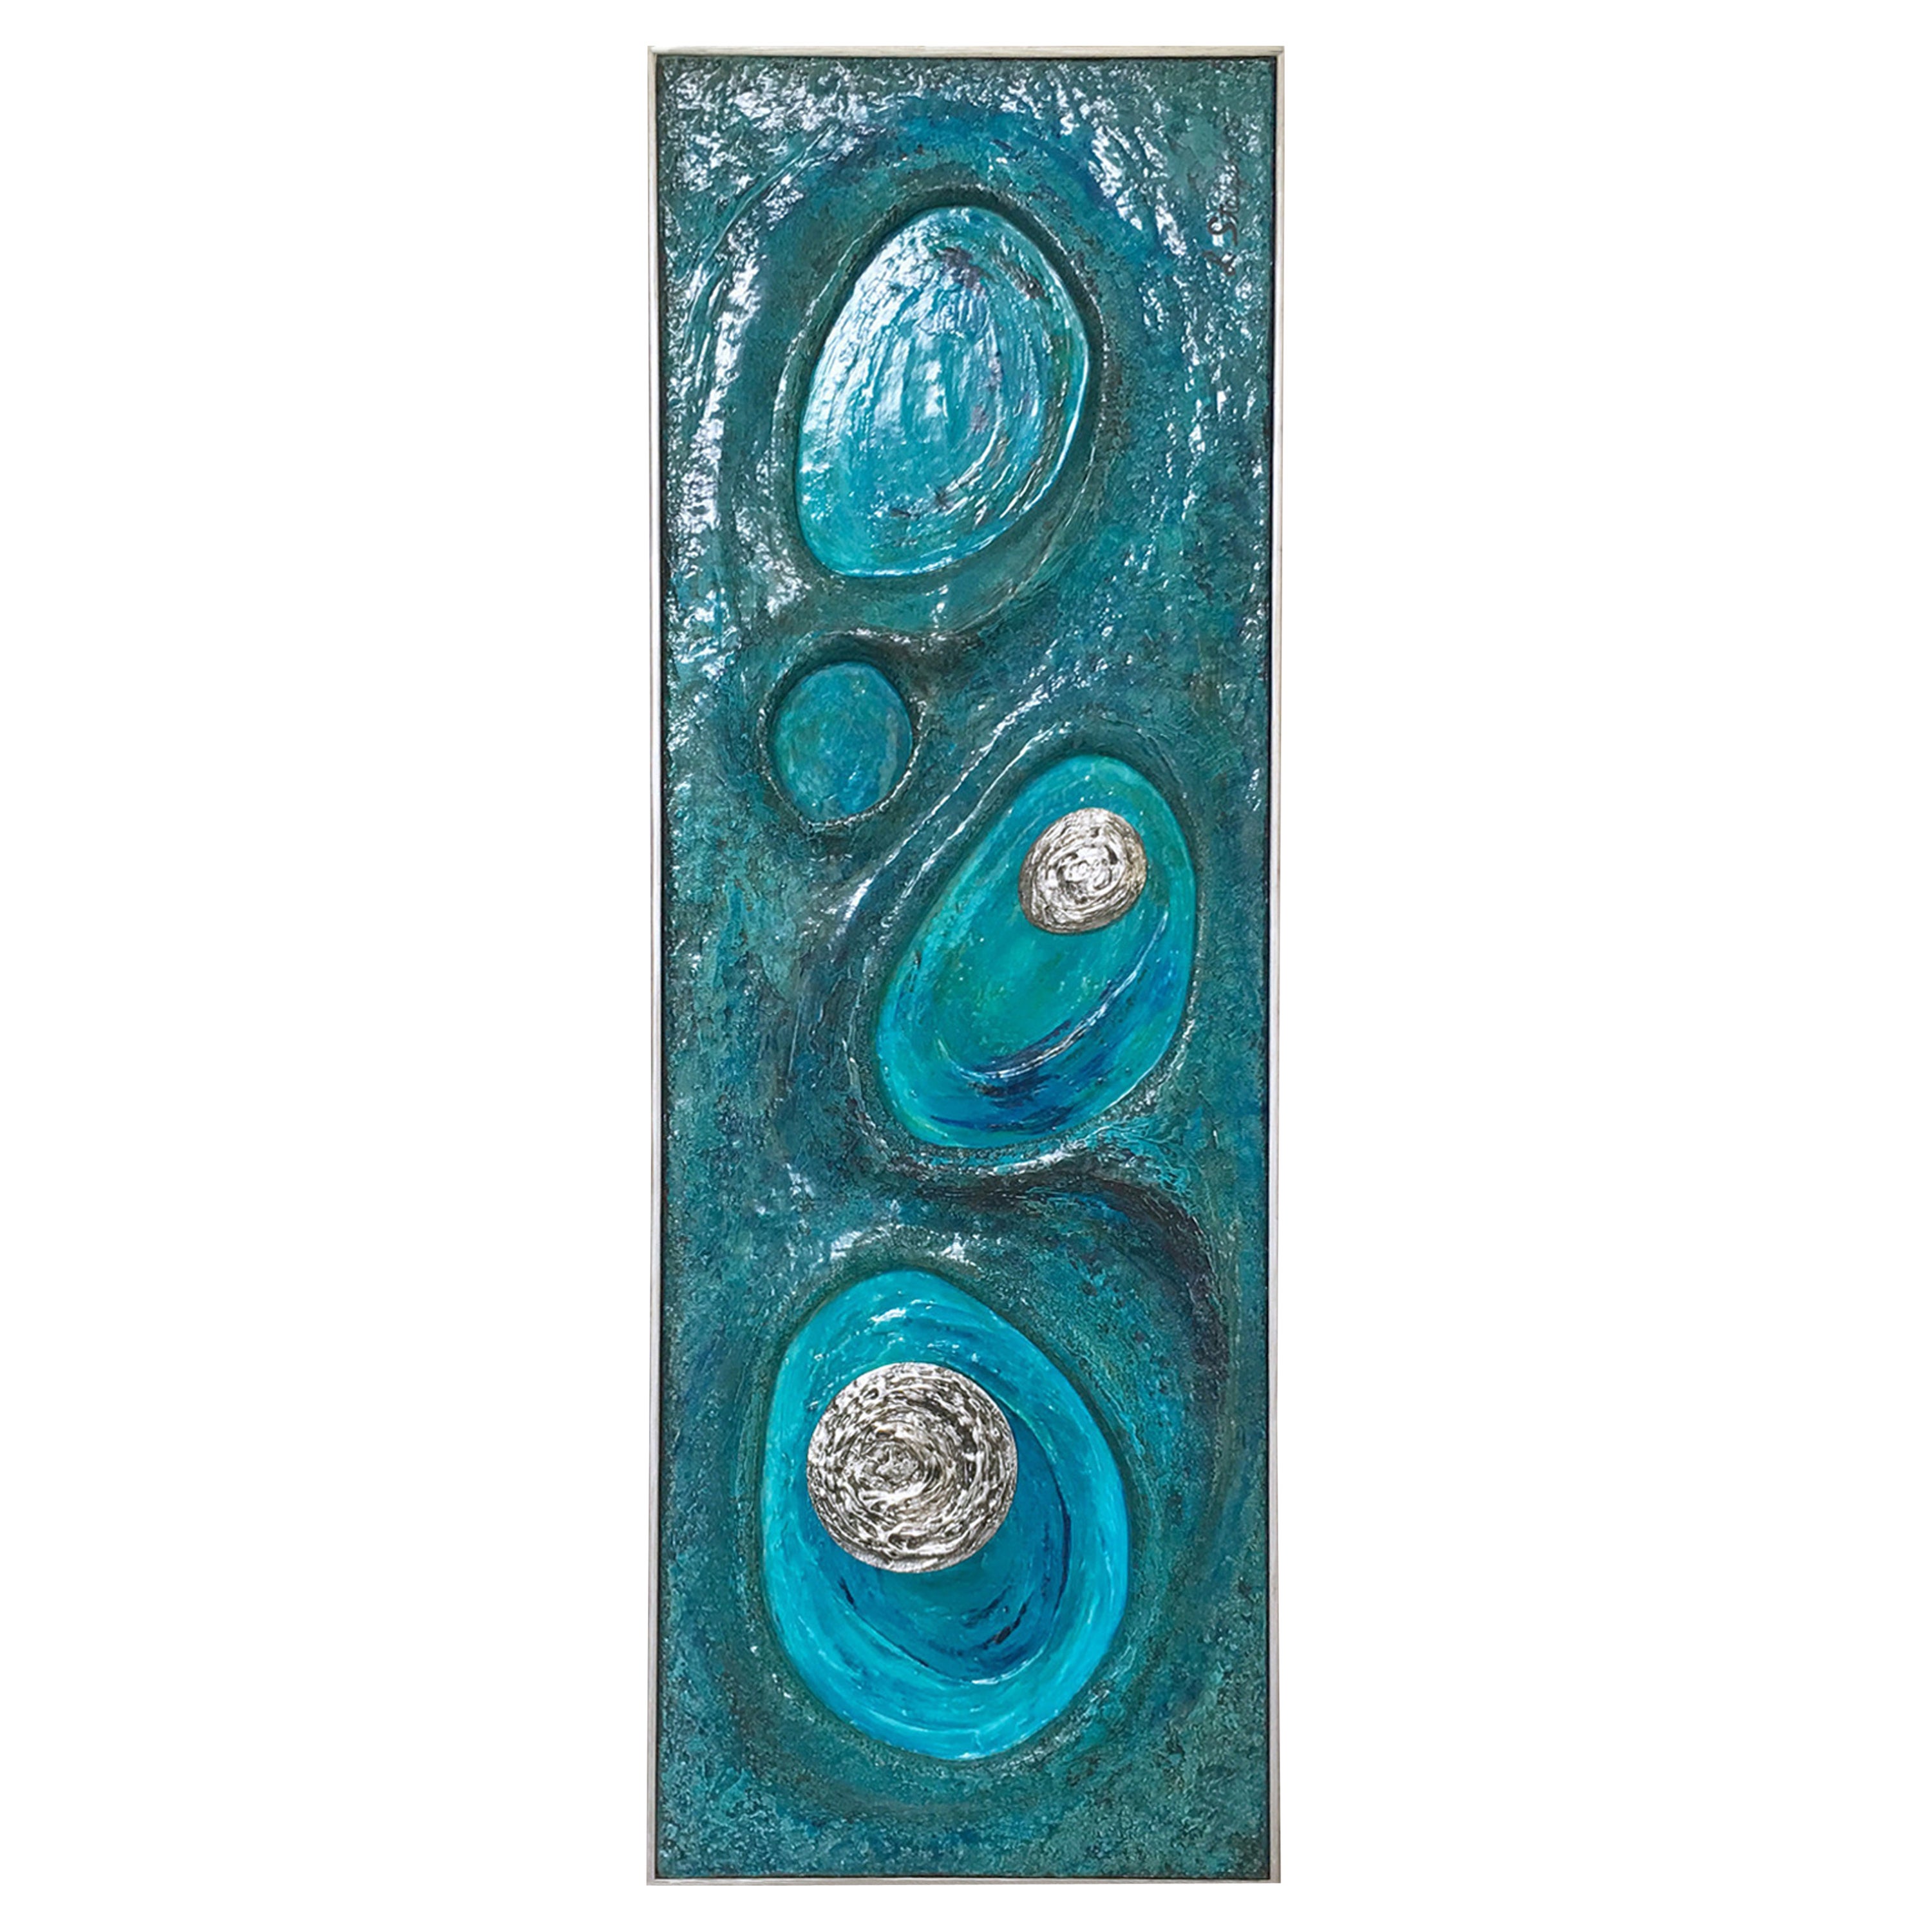 Lorraine Stelzer 1969 Turquoise Acrylic Resin Art Wall Sculpture Panel